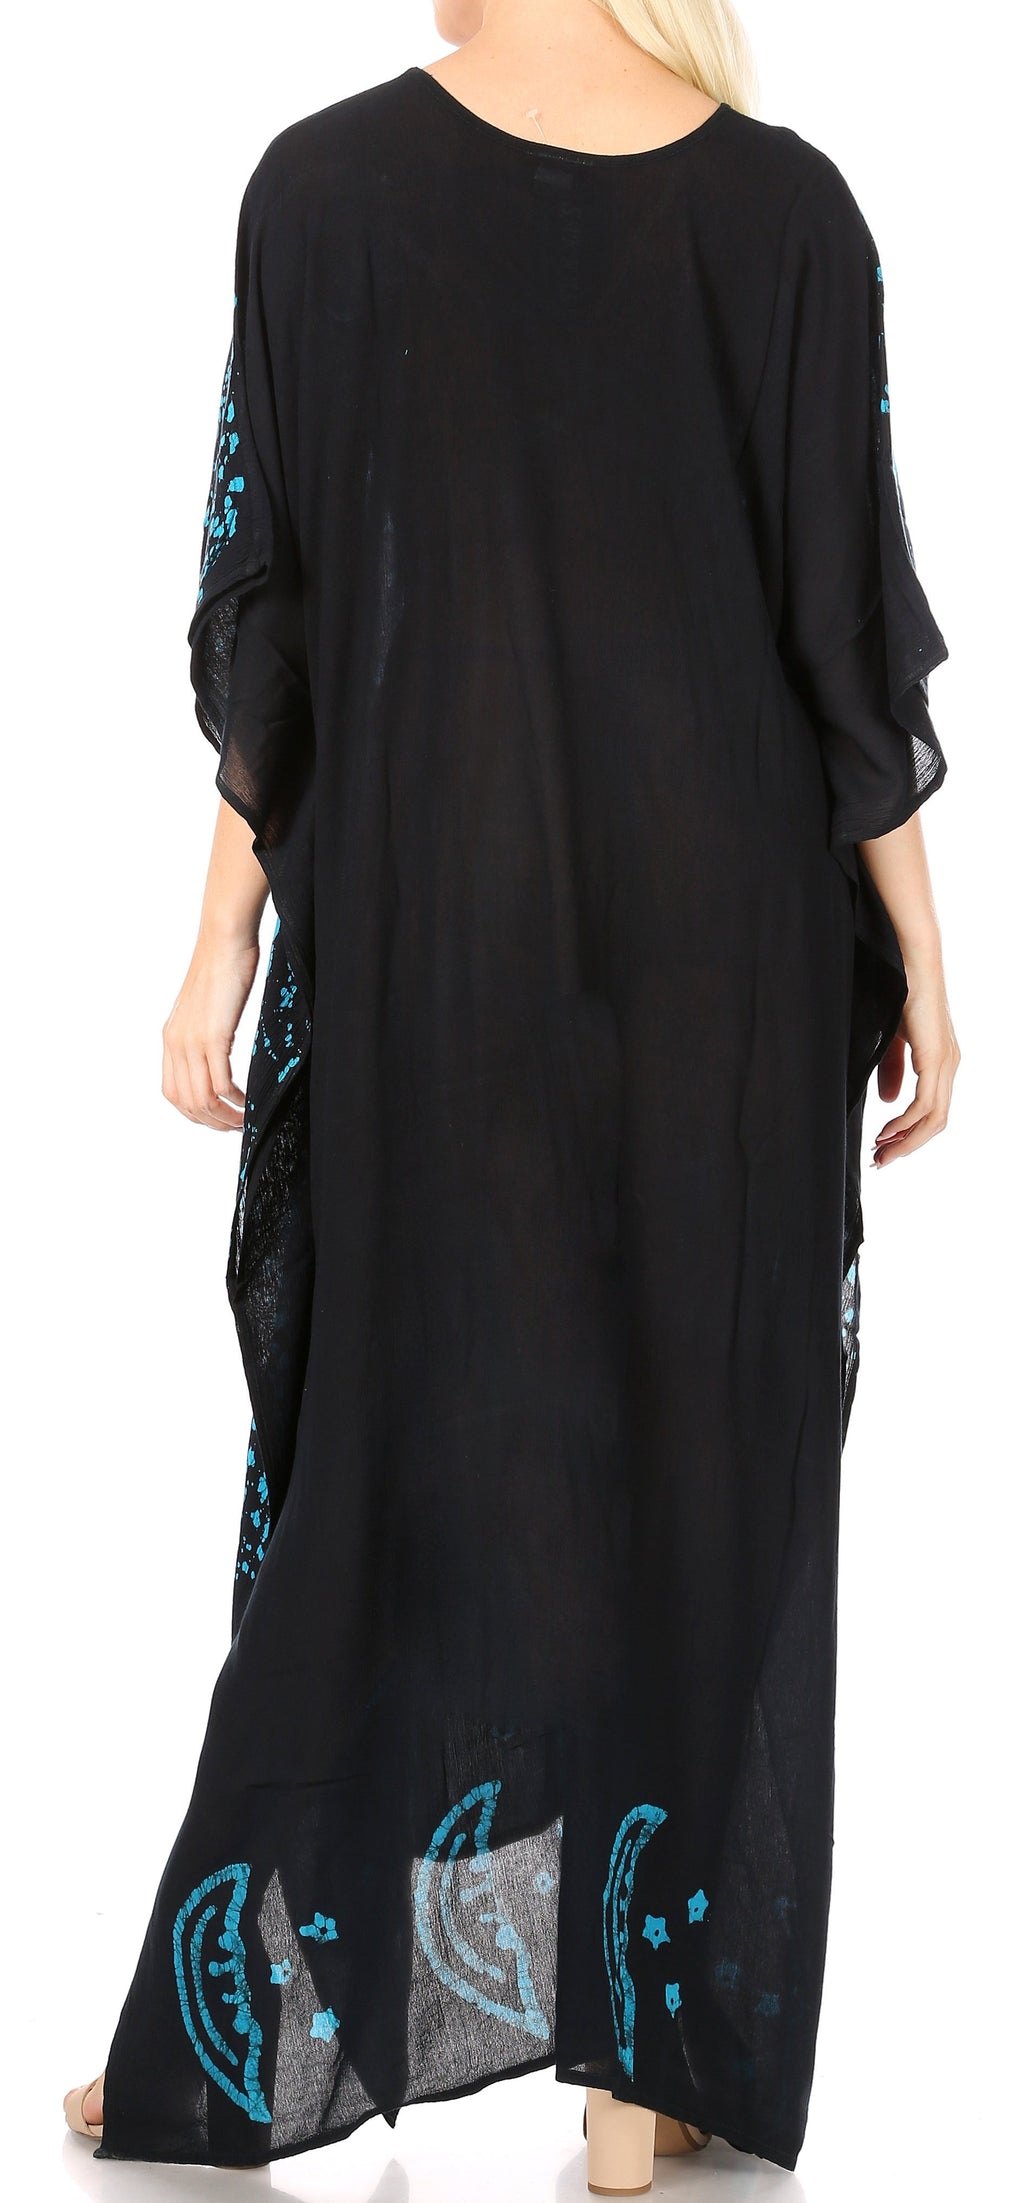 Sakkas Tacy Women's Boho Summer Maxi Dress for Casual or Lounge Wear